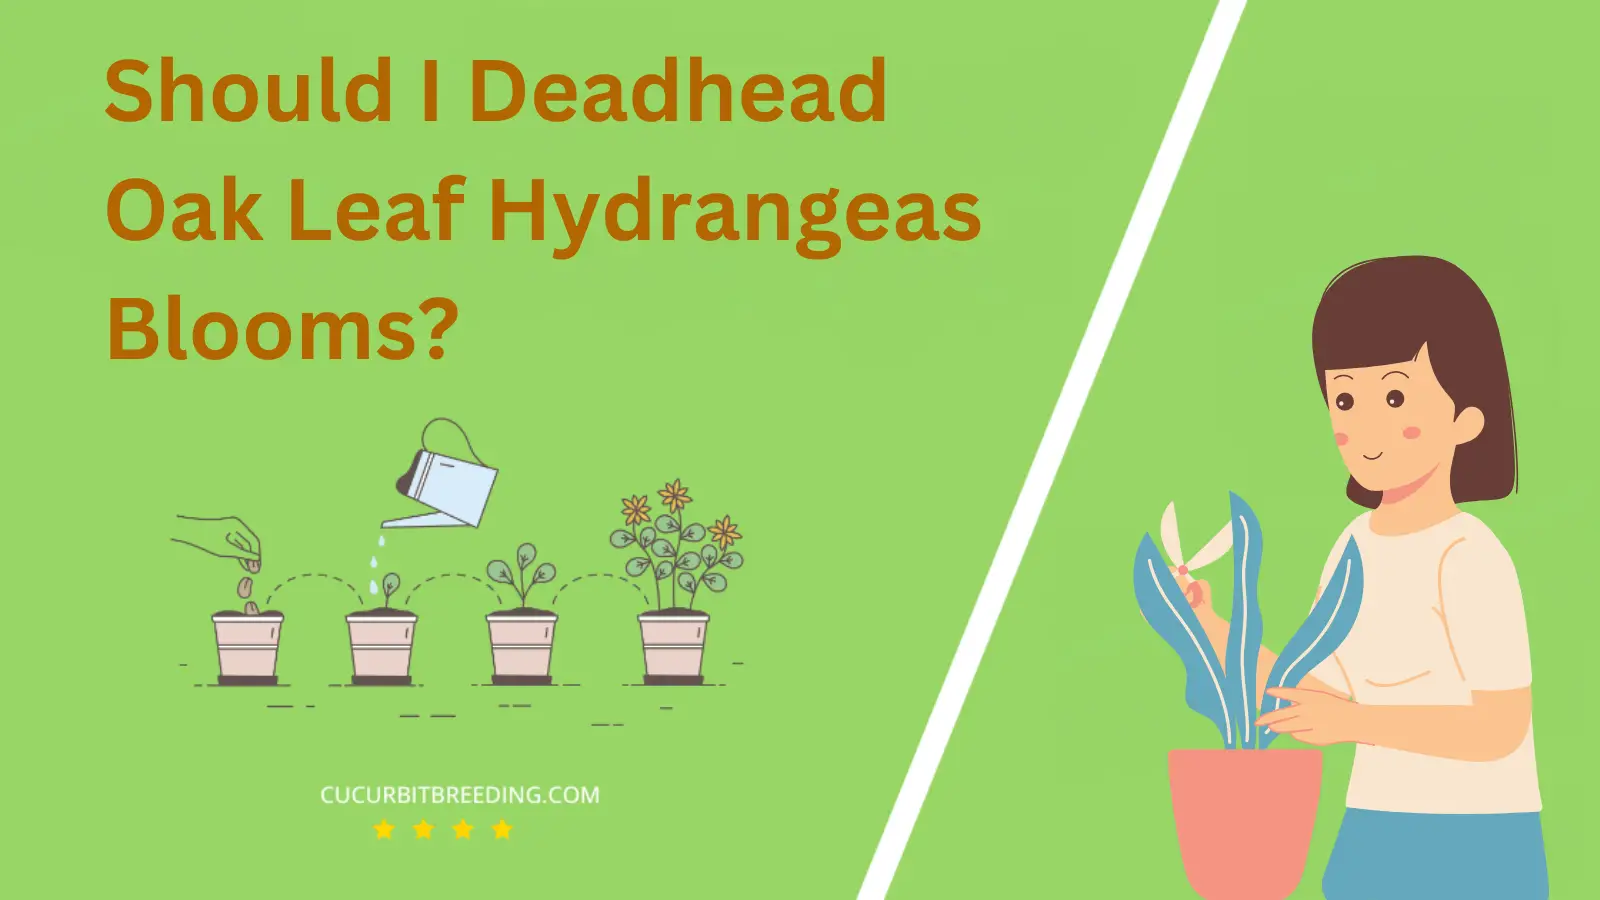 Should I Deadhead Oak Leaf Hydrangeas Blooms?